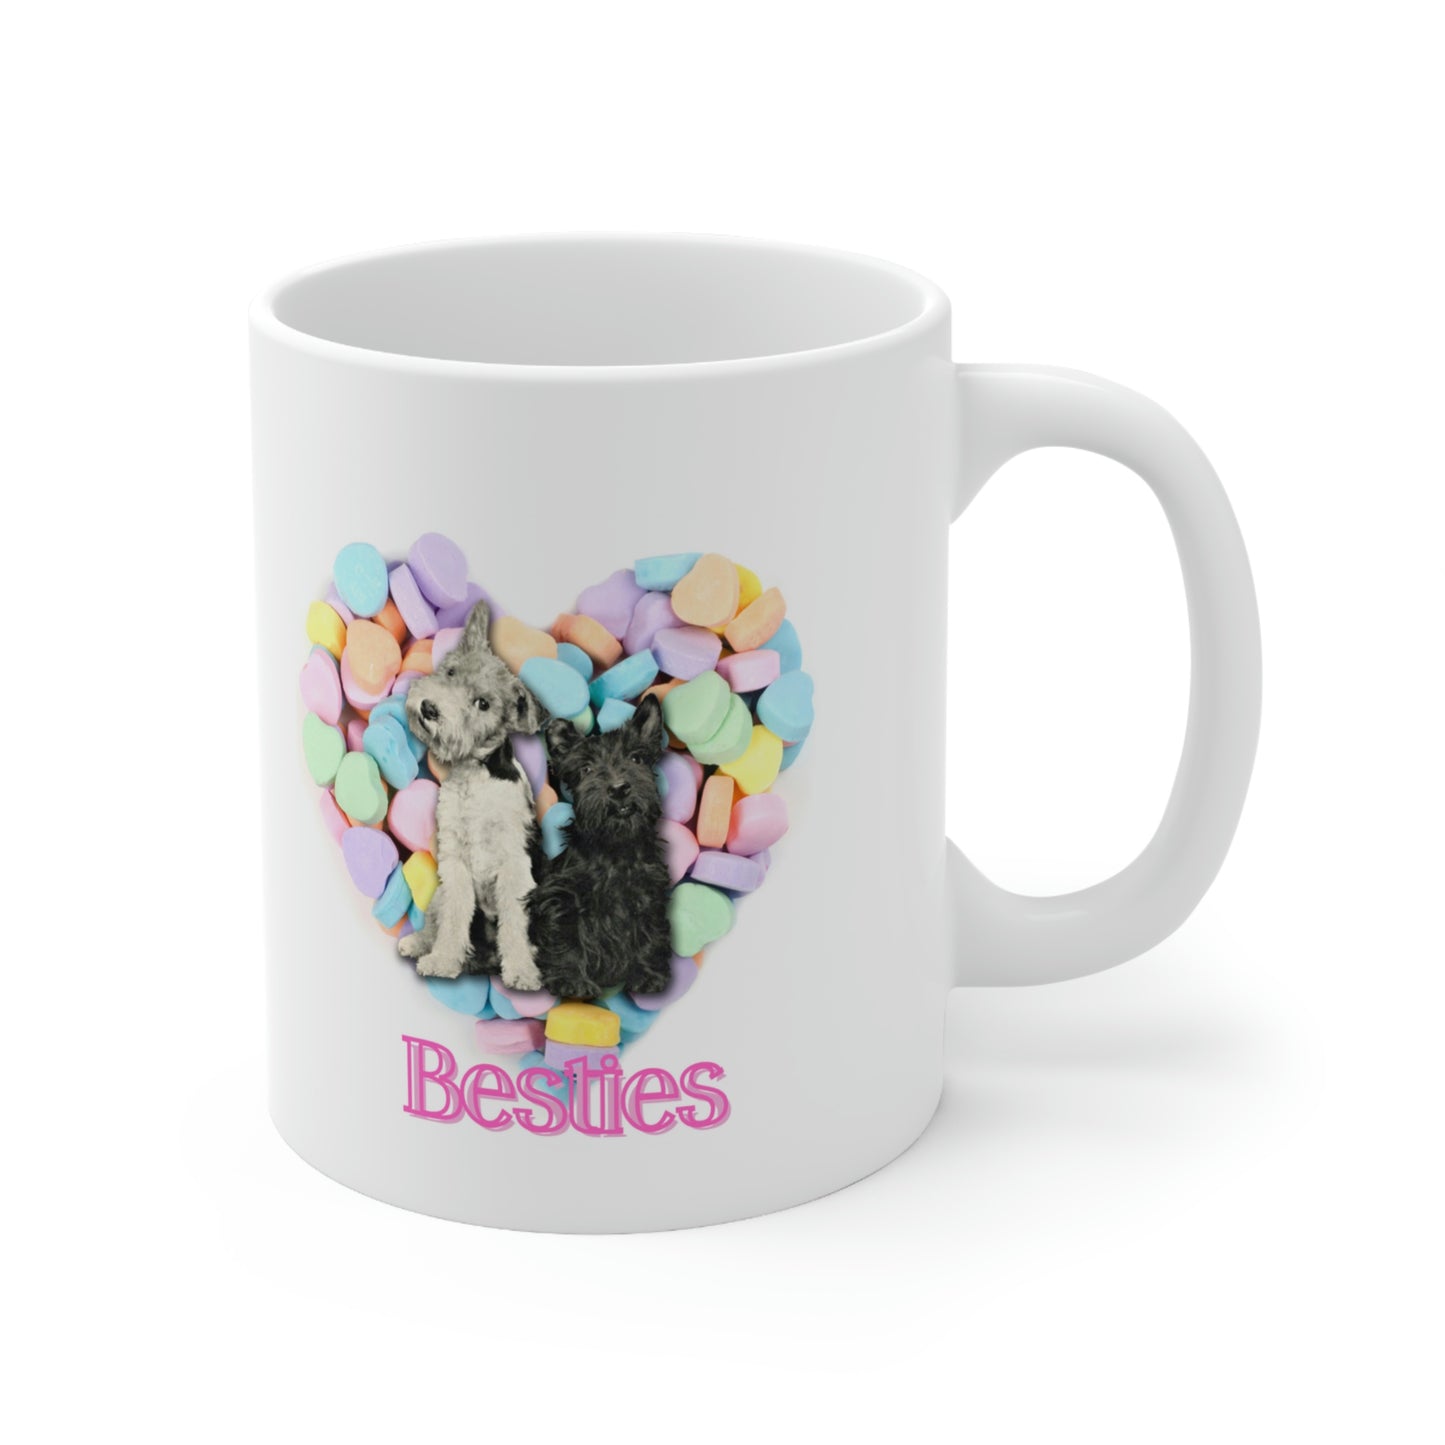 Valentine Hearts "Besties" Mug, Cute Dogs and Candy Hearts Ceramic Mug 11oz Galentine's Day Gift